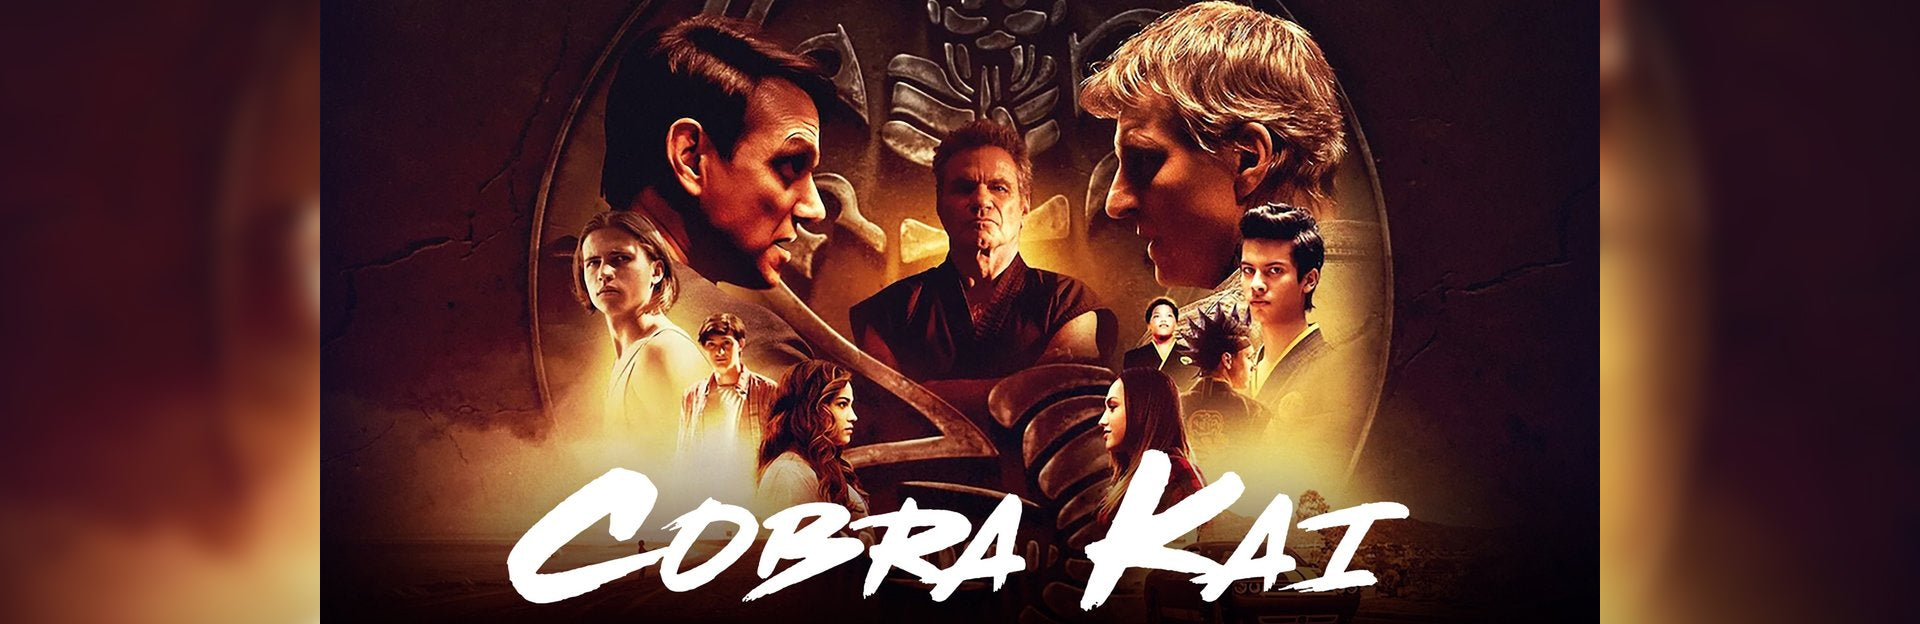 7 Cobra Kai Season 6 Characters That Could Be The Show's Final Villain